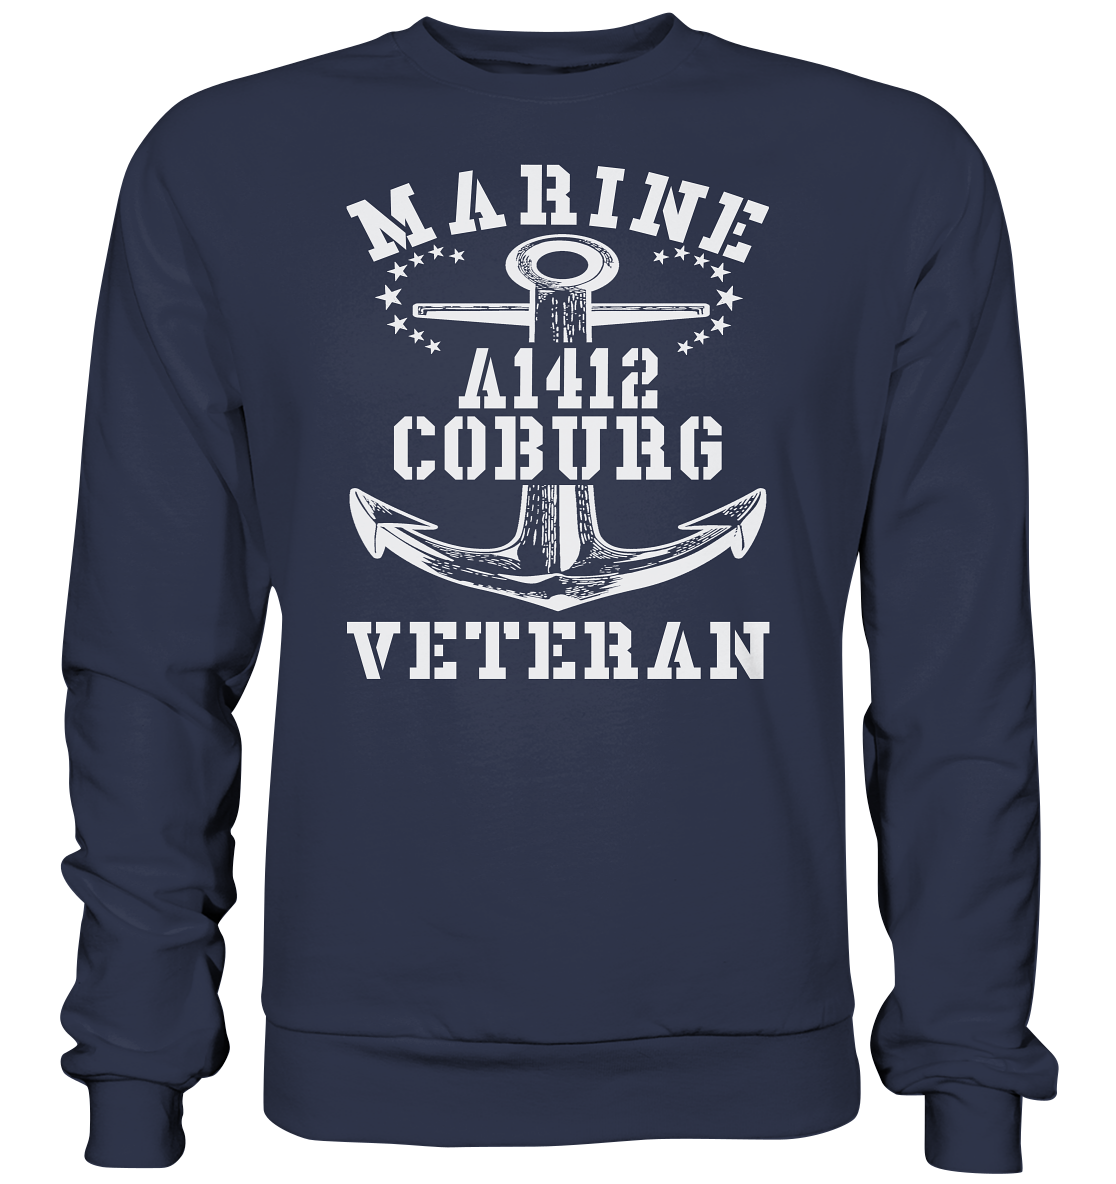 Troßschiff A1412 COBURG Marine Veteran  - Premium Sweatshirt